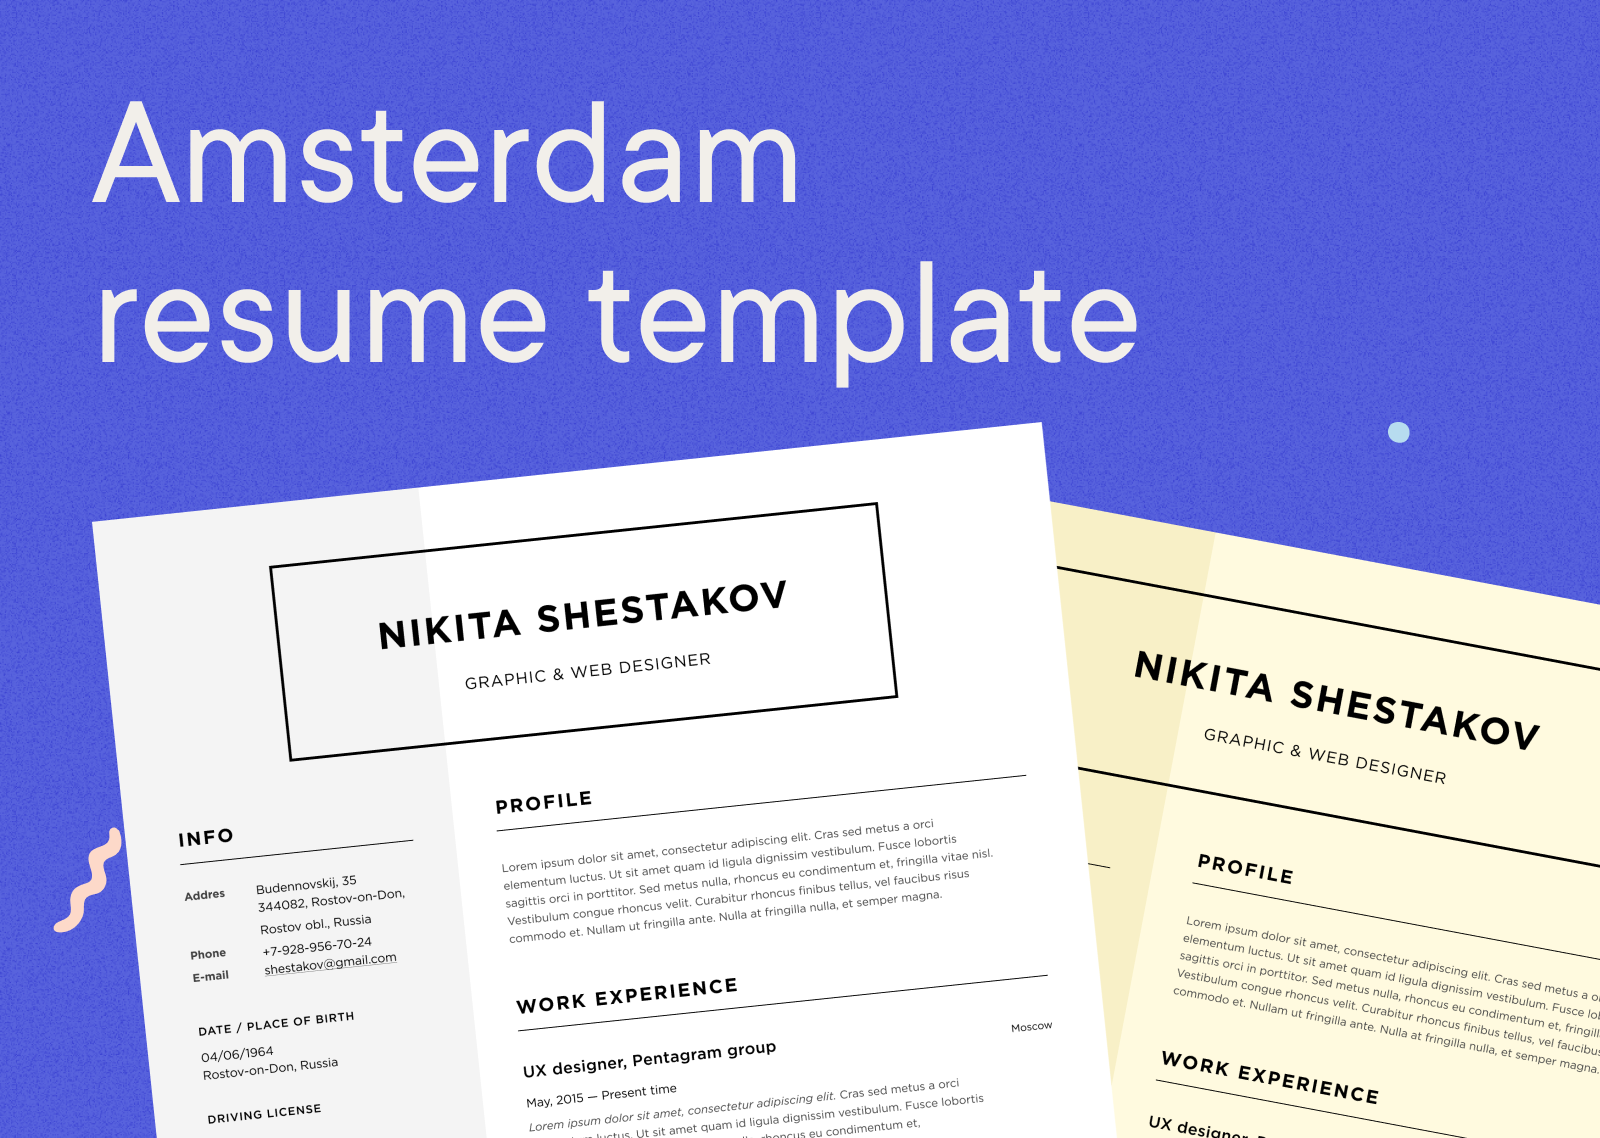 Blogs - Amsterdam resume template